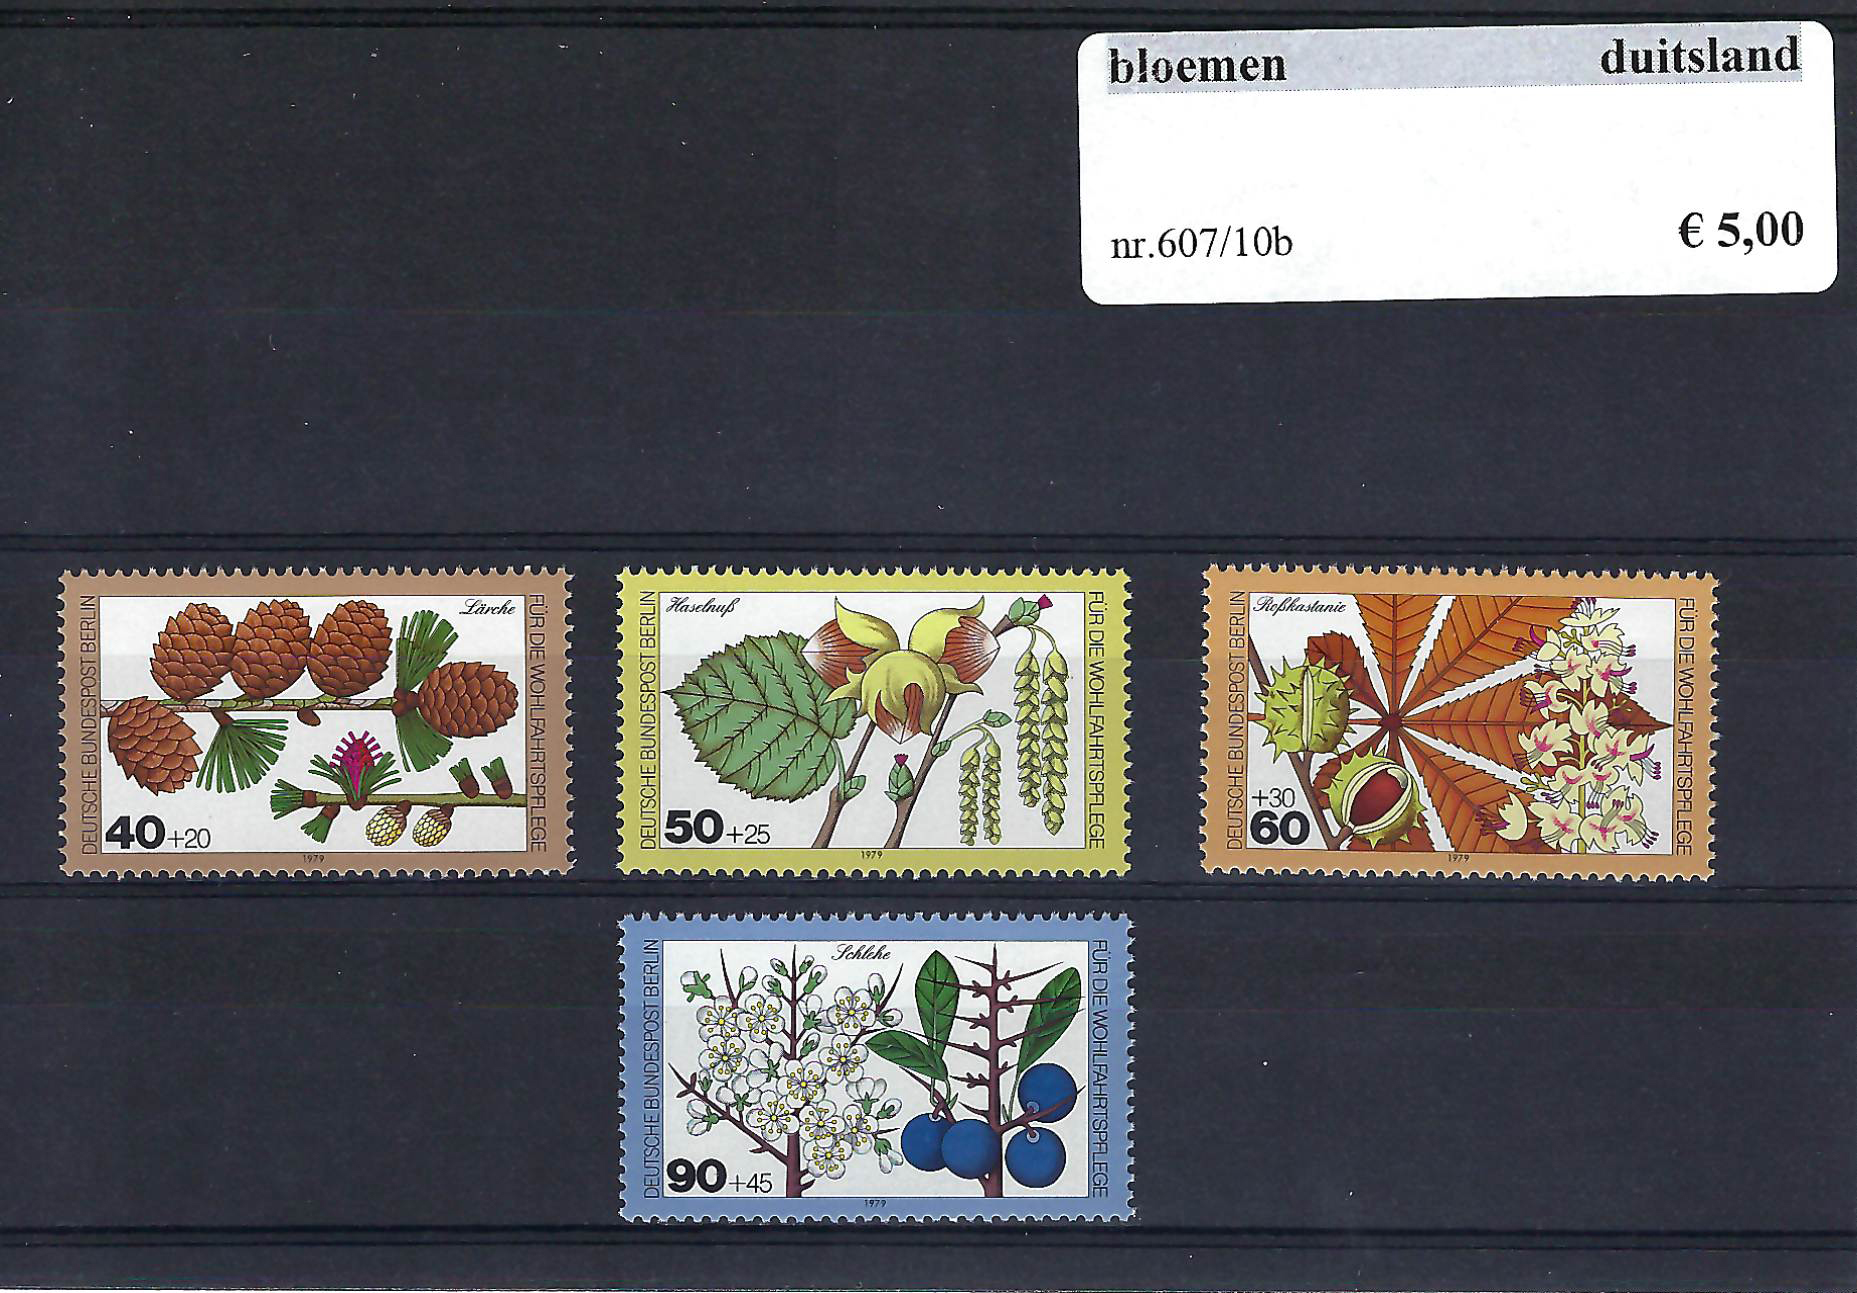 Themazegels Bloemen Duitsland nr. 607/610b